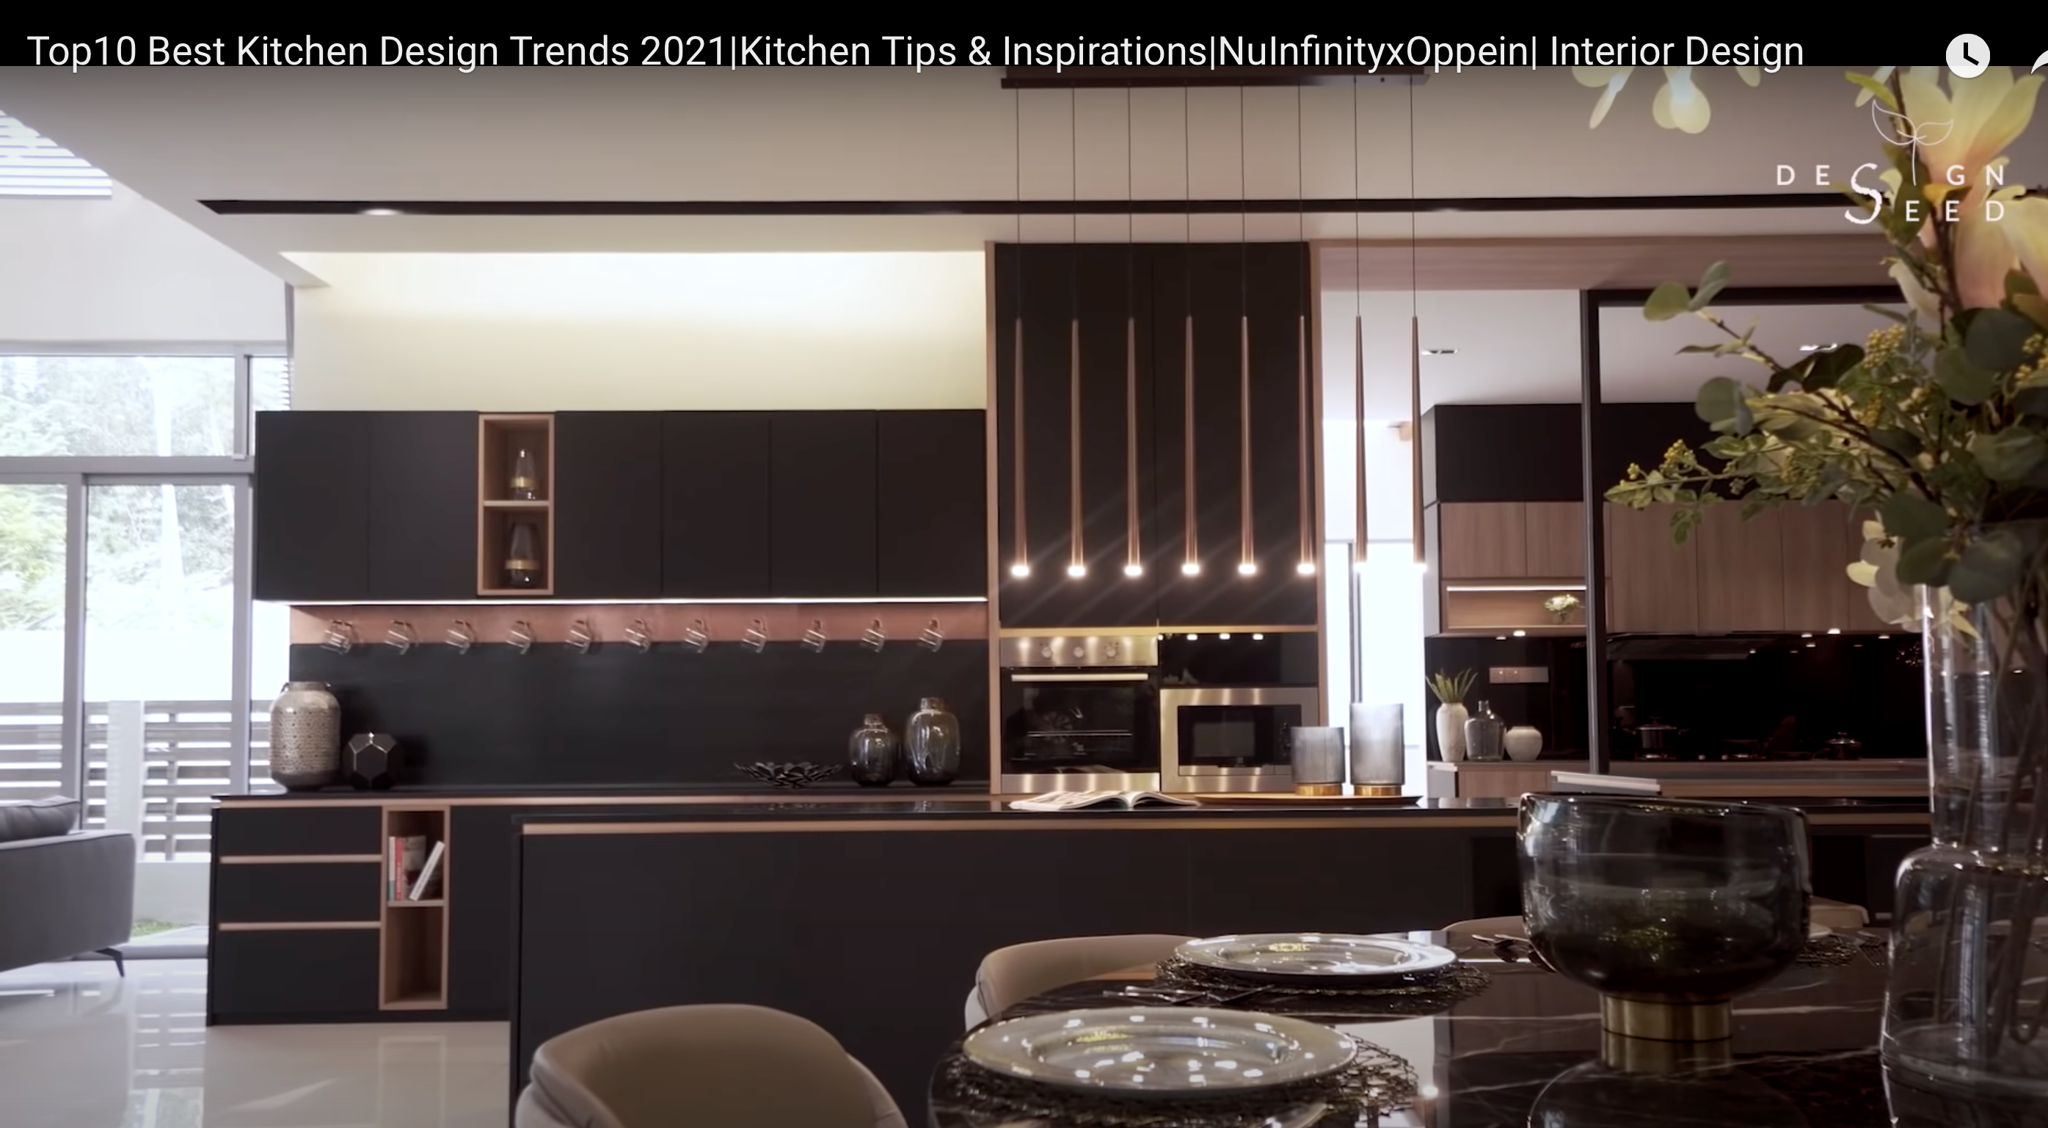 Top 10 best kitchen design trends 2021